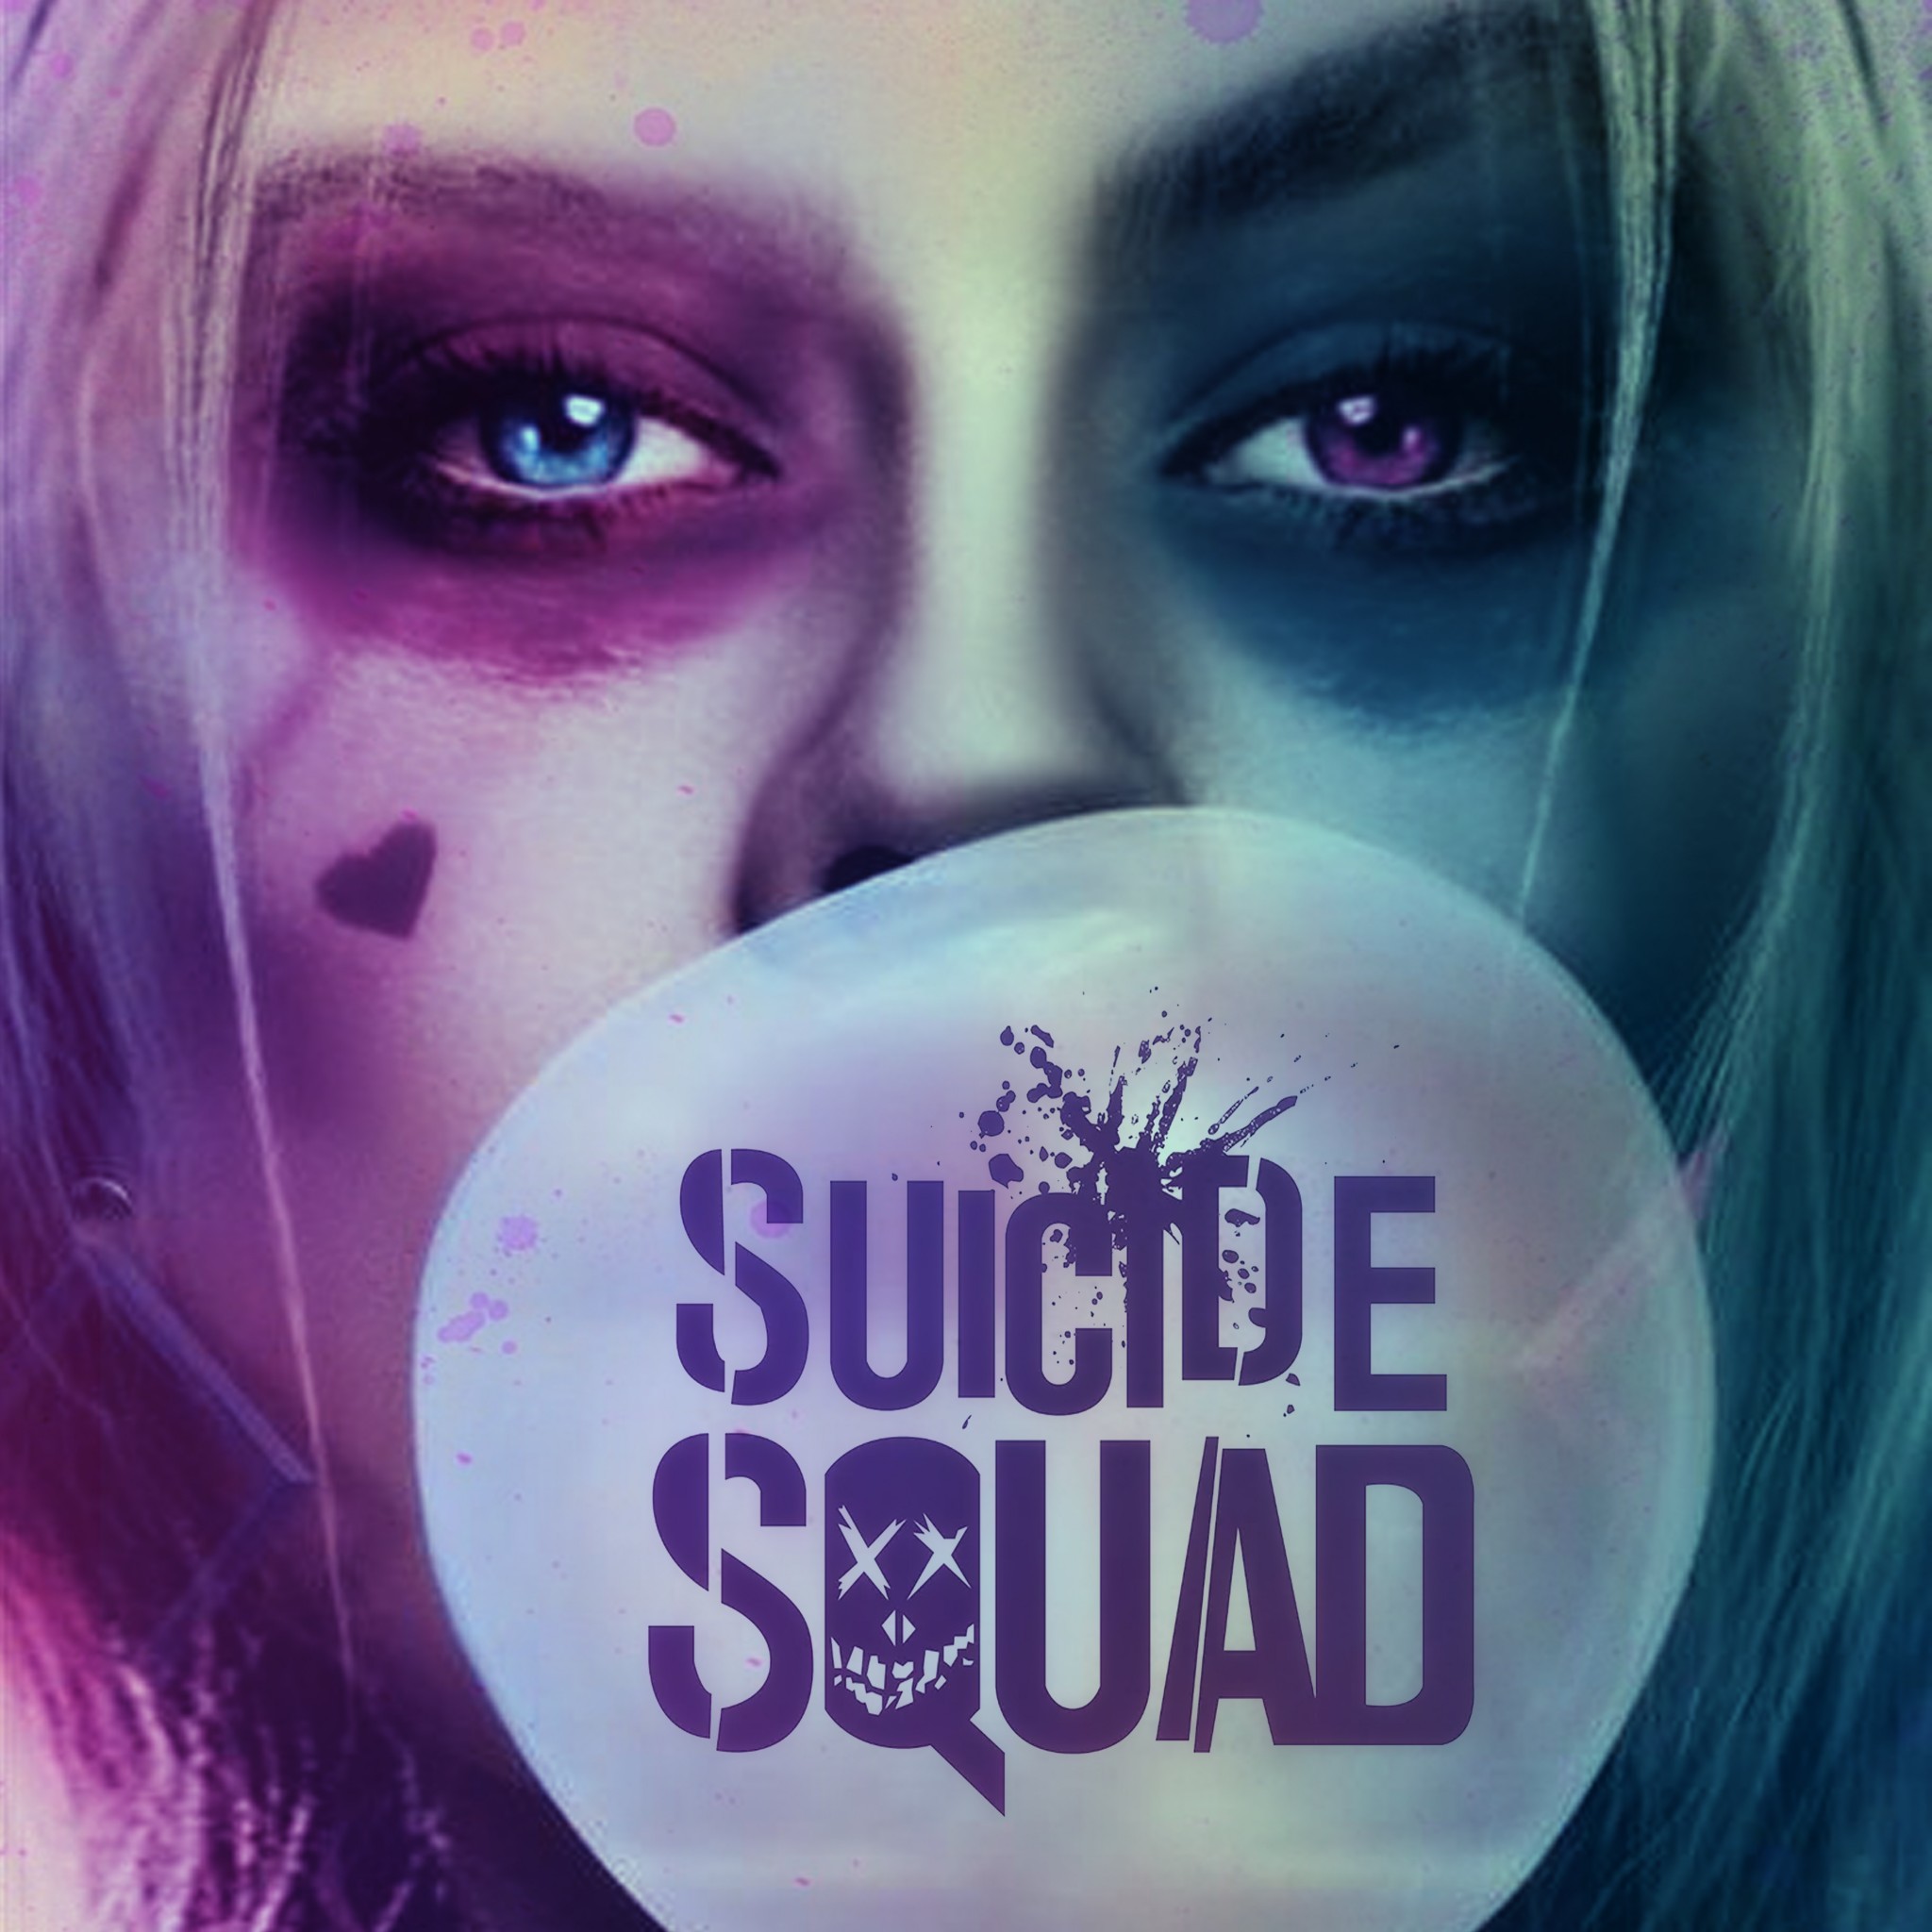 2048x2048 Download Suicide Squad 2048 x 2048 Wallpapers - 4660031 - FICTION VILLAIN  SUPERHERO SUICIDE SQUAD HARLEY QUINN JOKER | mobile9